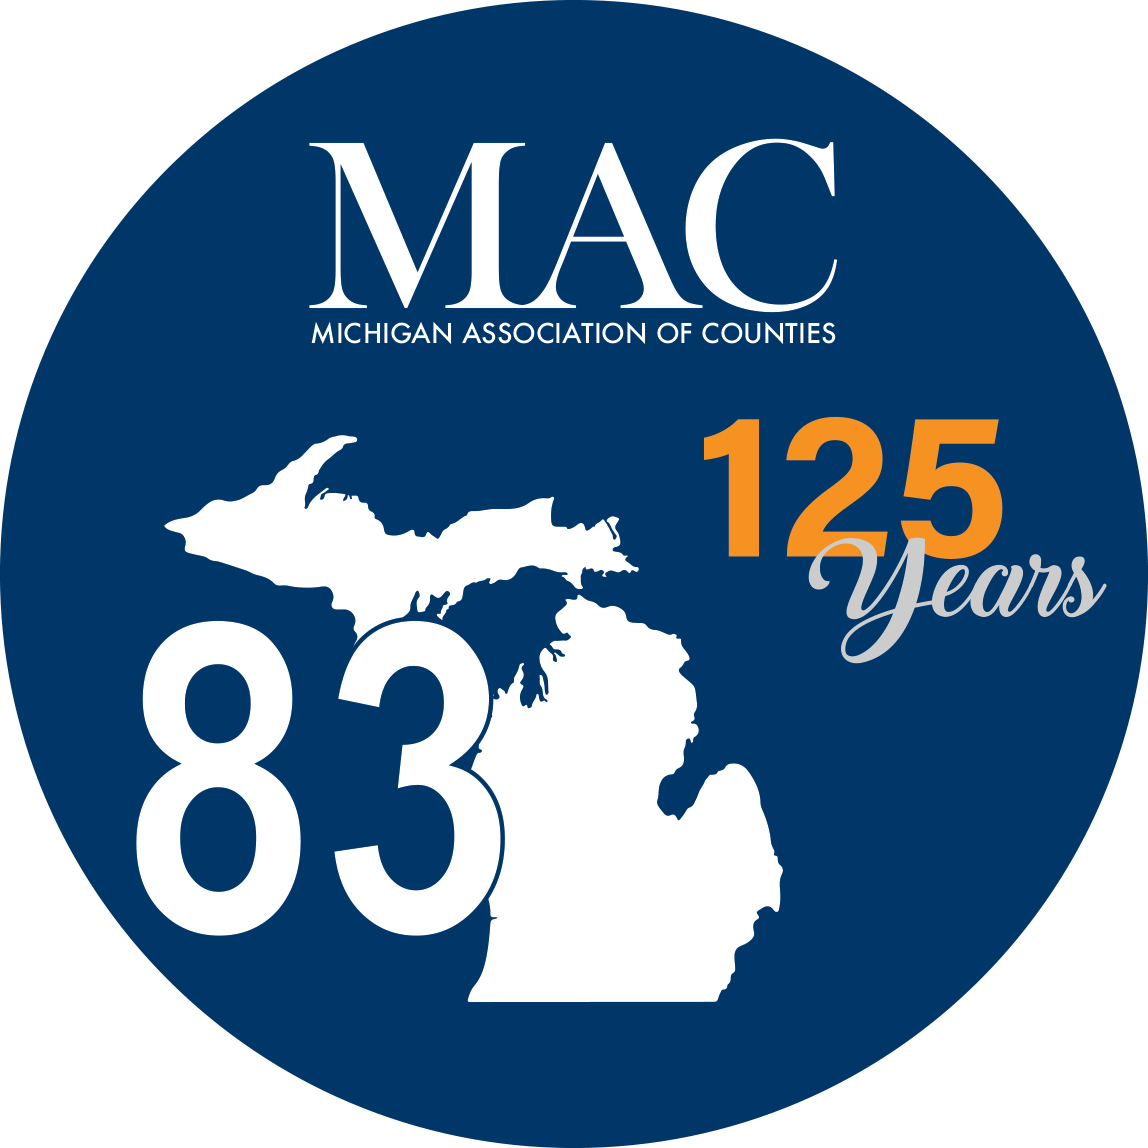 The Michigan Association of Counties (MAC)